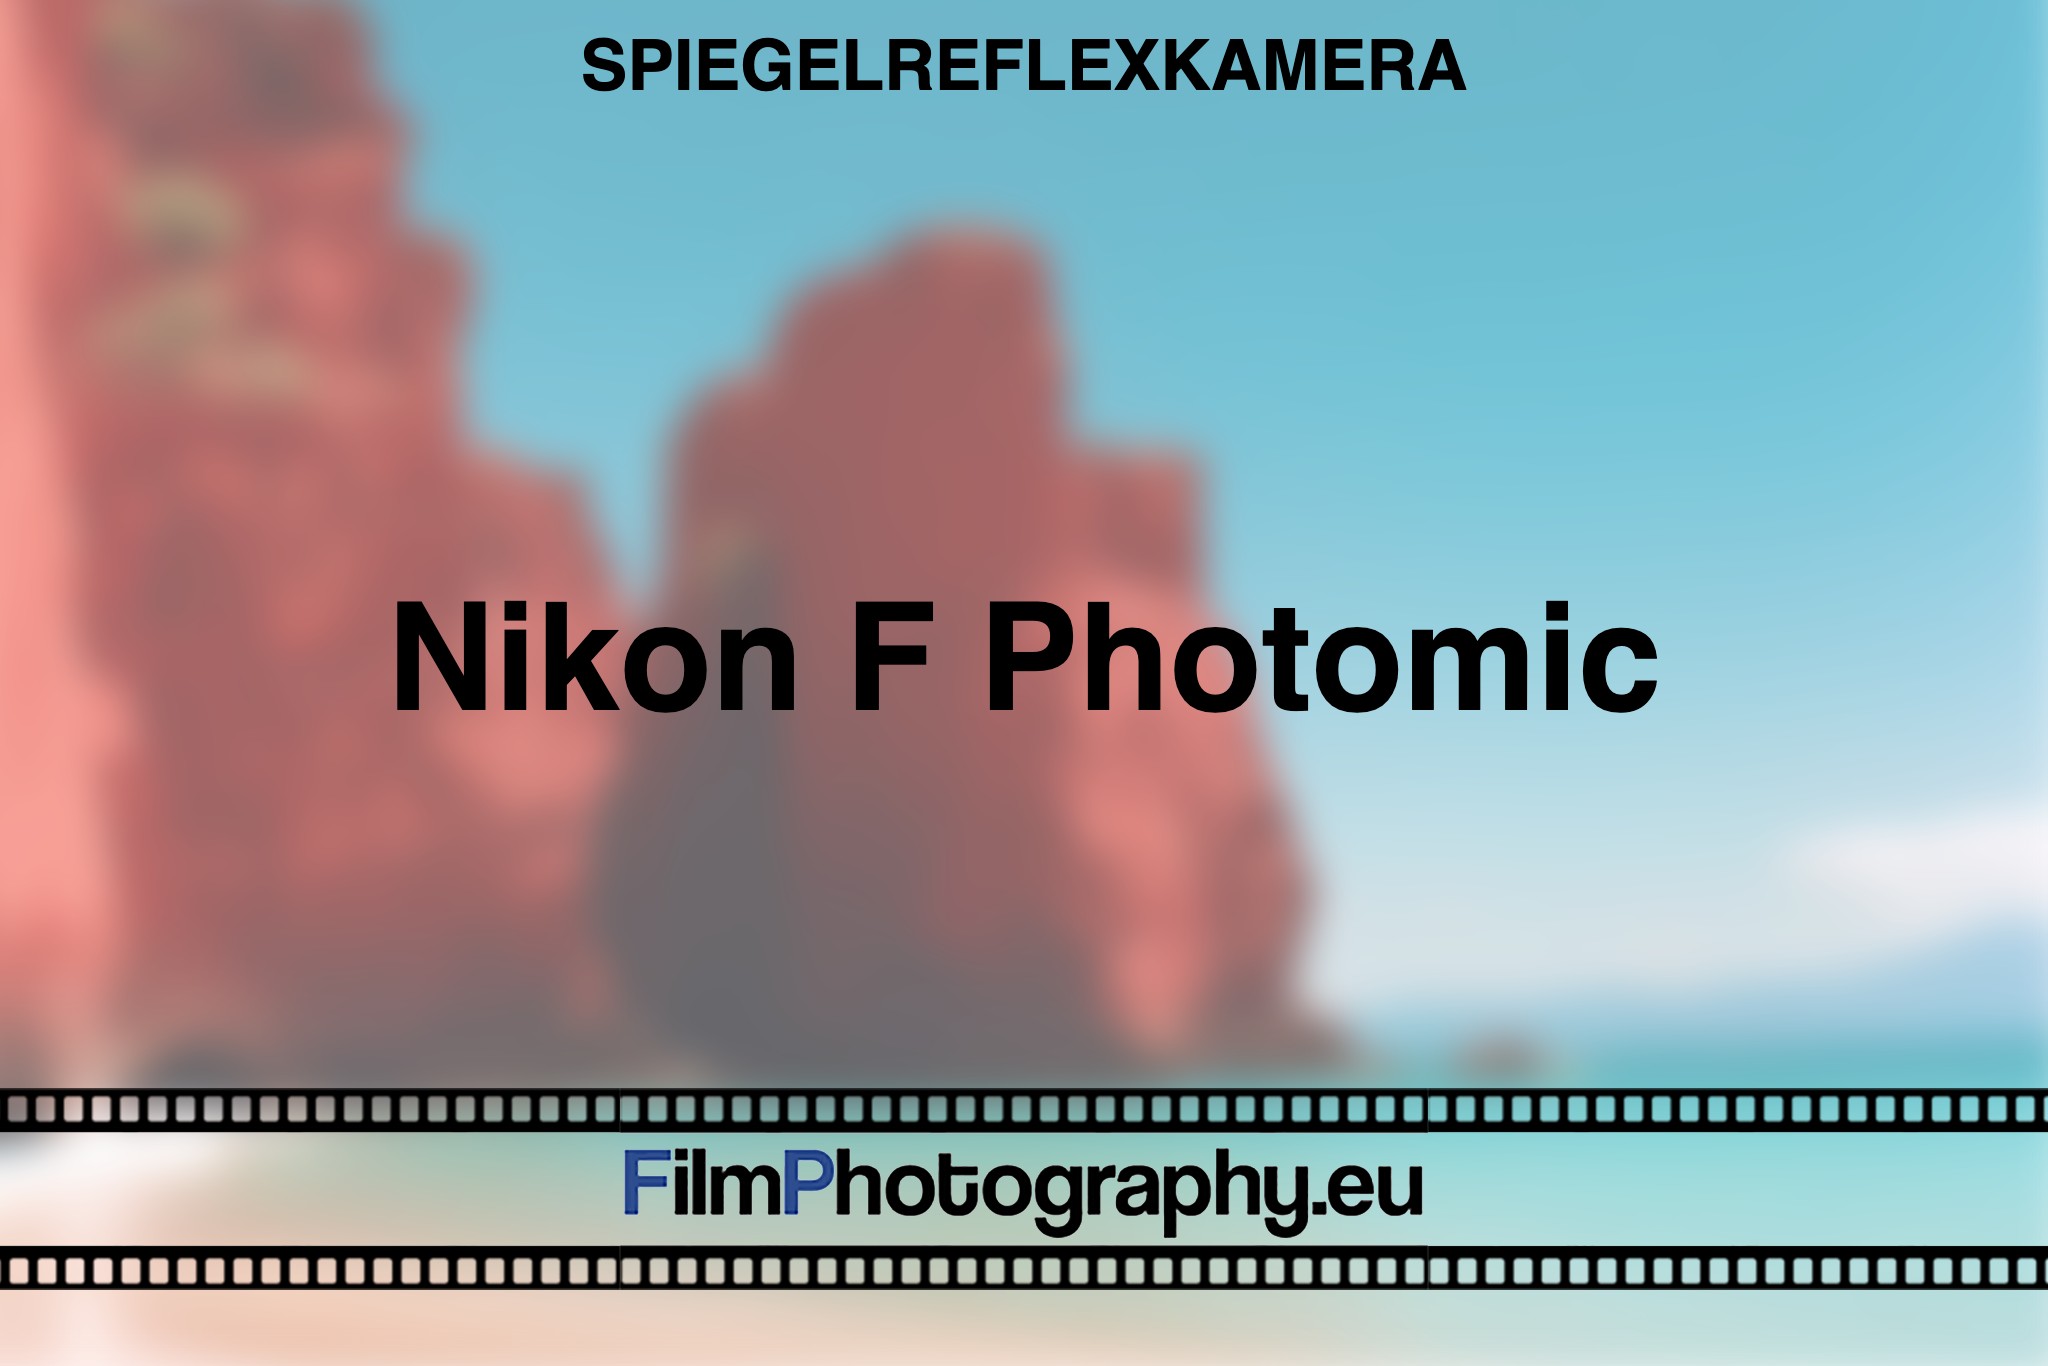 nikon-f-photomic-spiegelreflexkamera-bnv